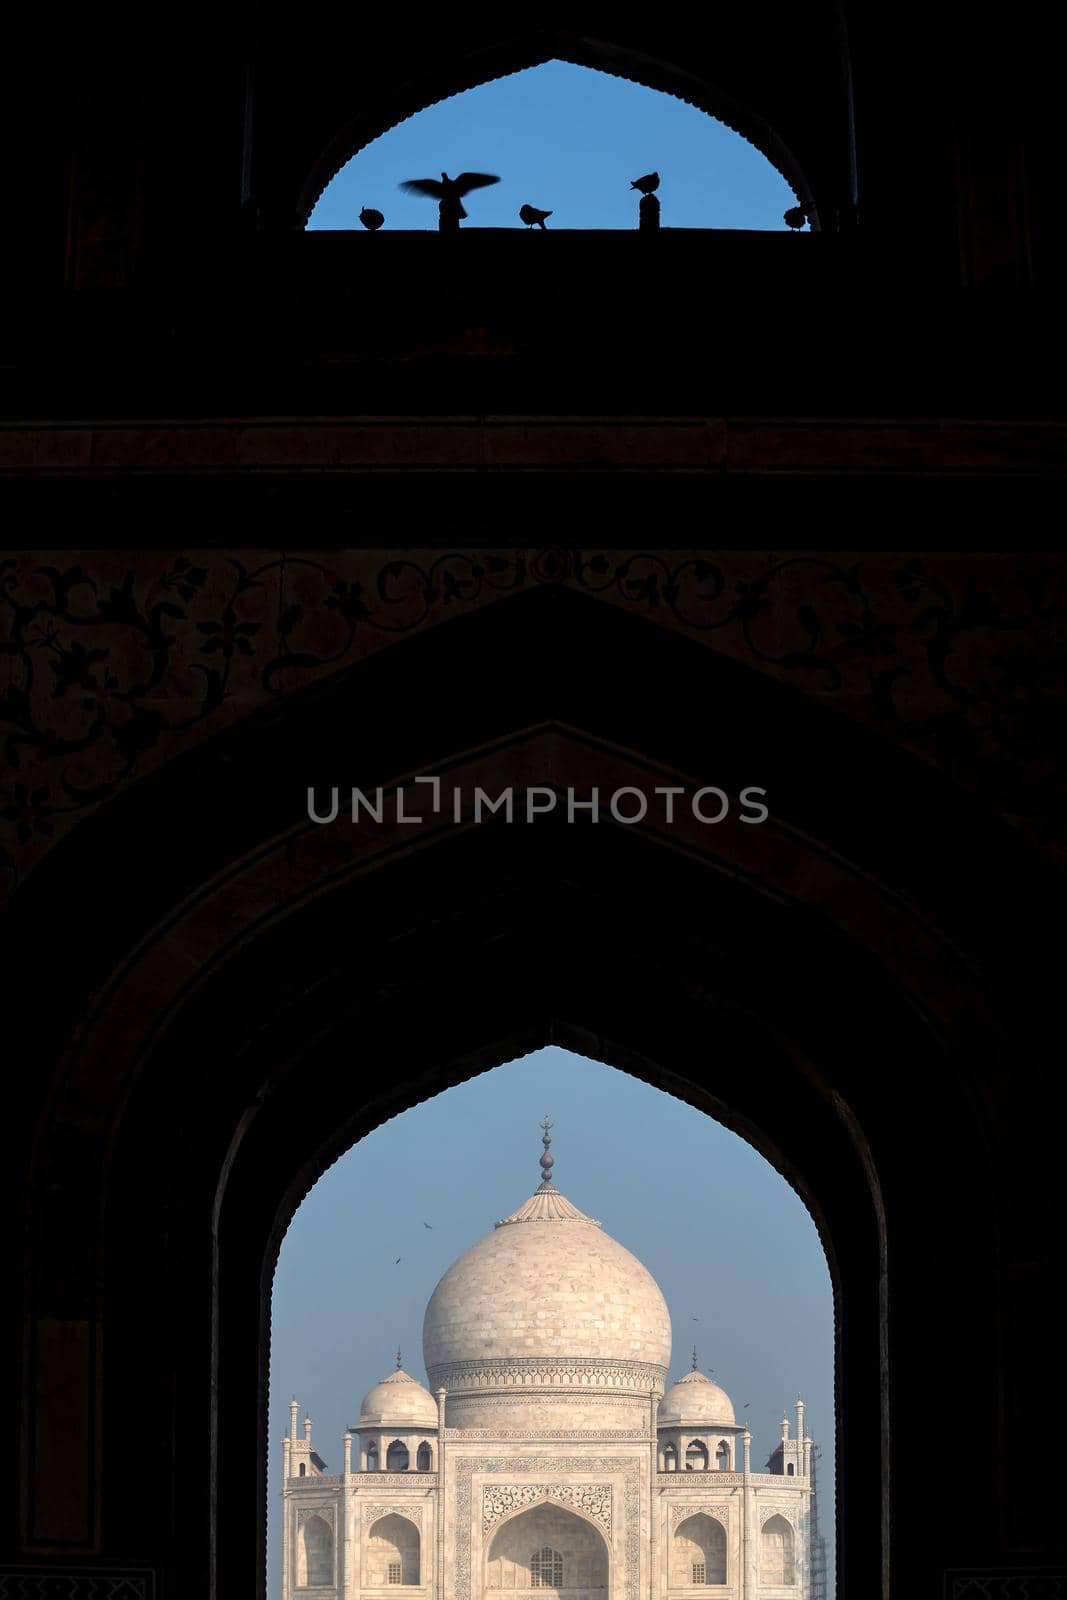 Taj Mahal in Agra, India  by f11photo